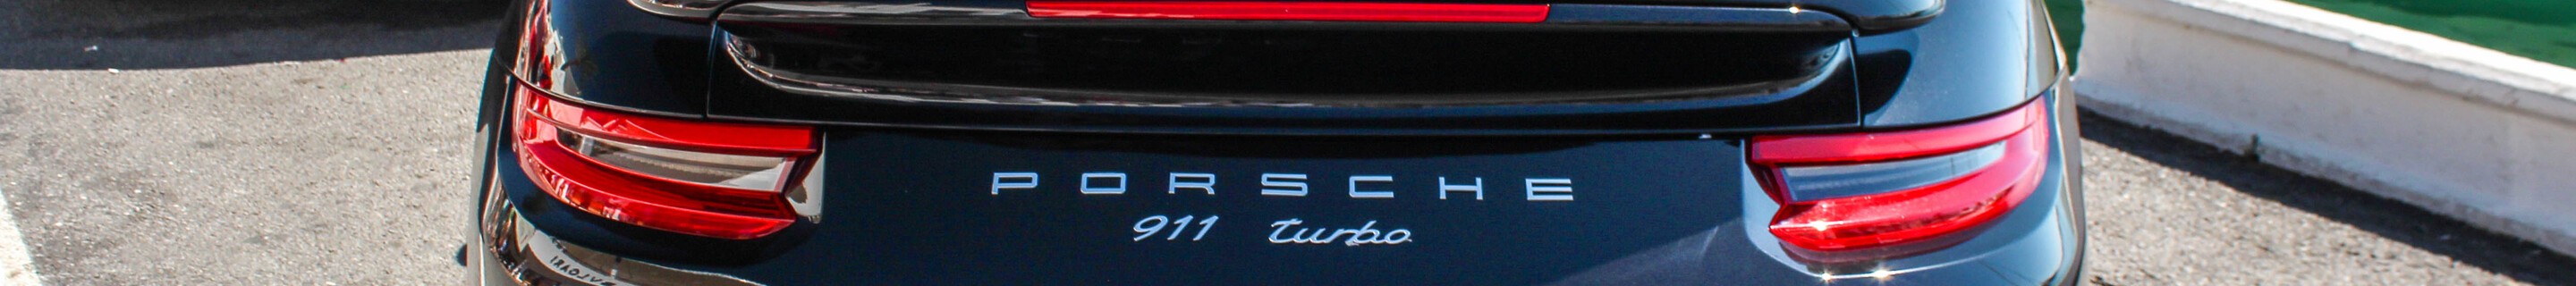 Porsche 991 Turbo MkII